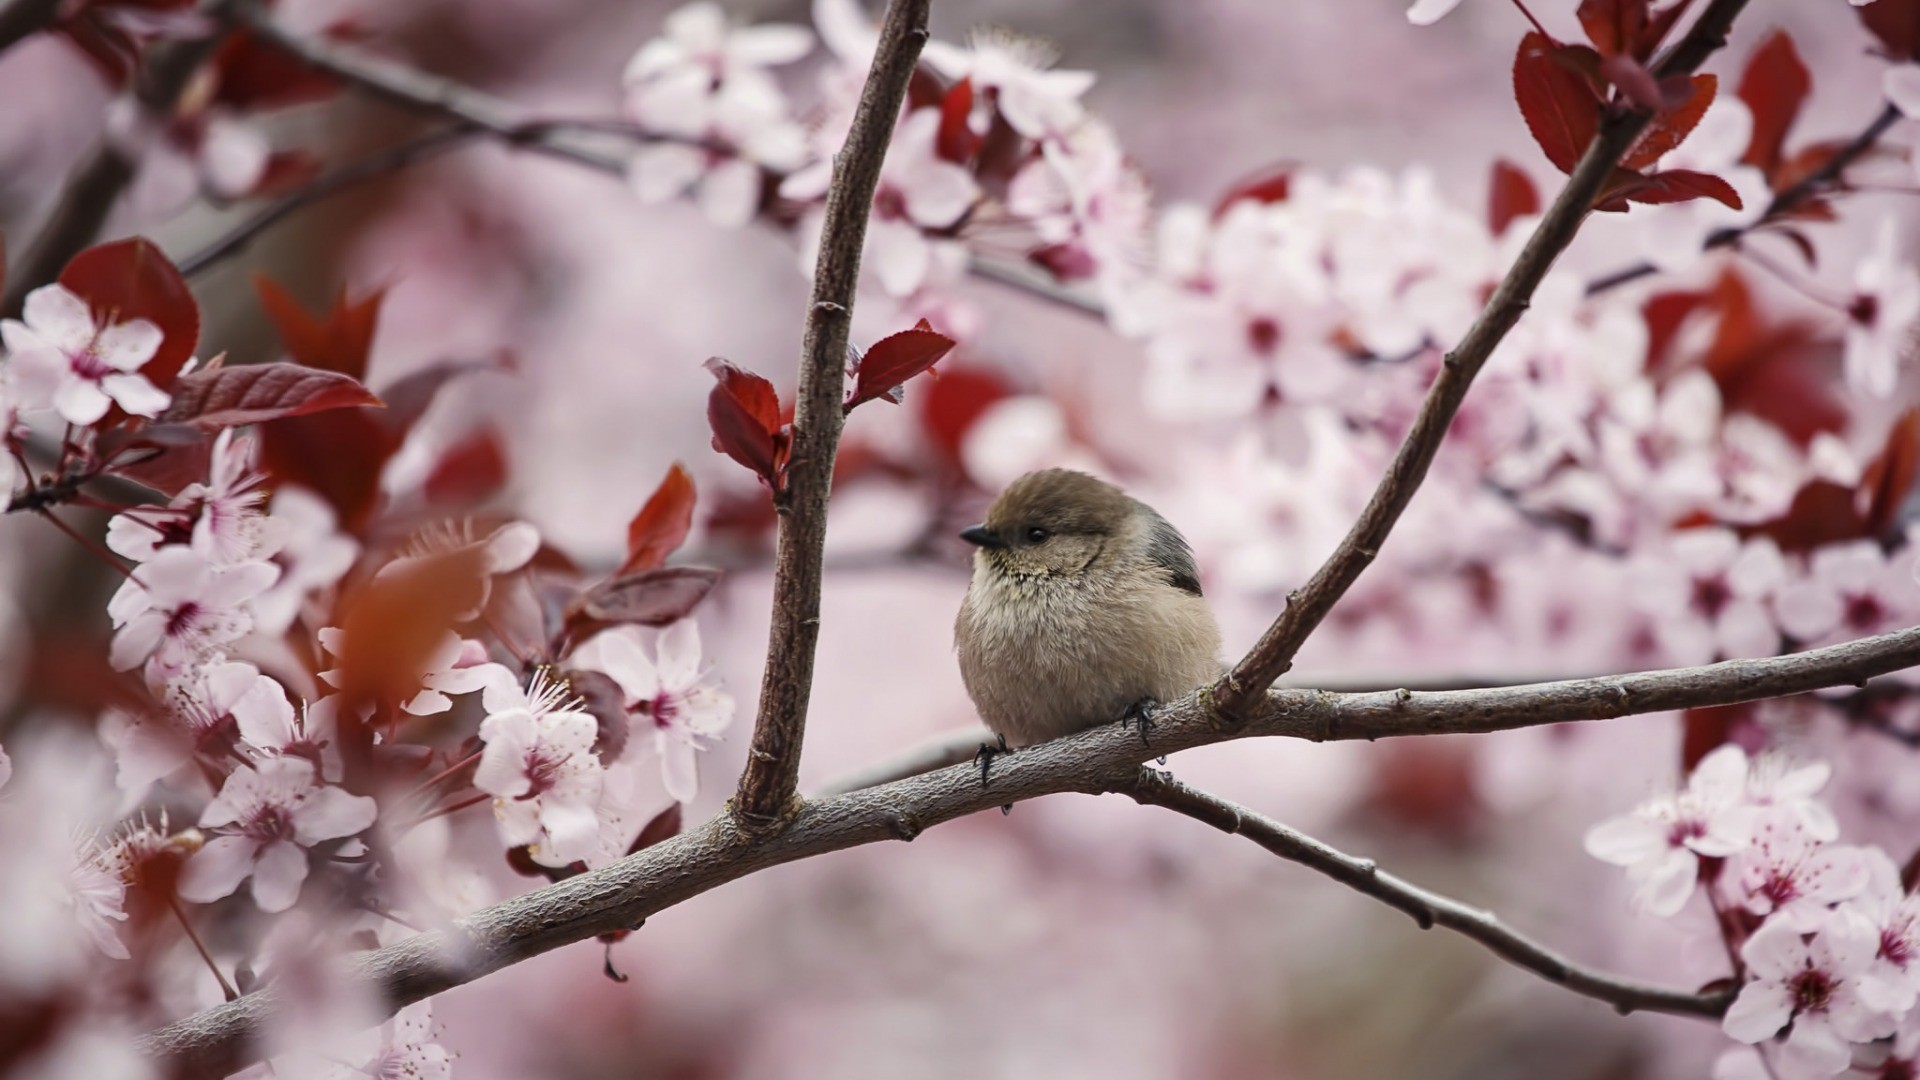 General 1920x1080 photography birds cherry blossom animals plants branch titmouse